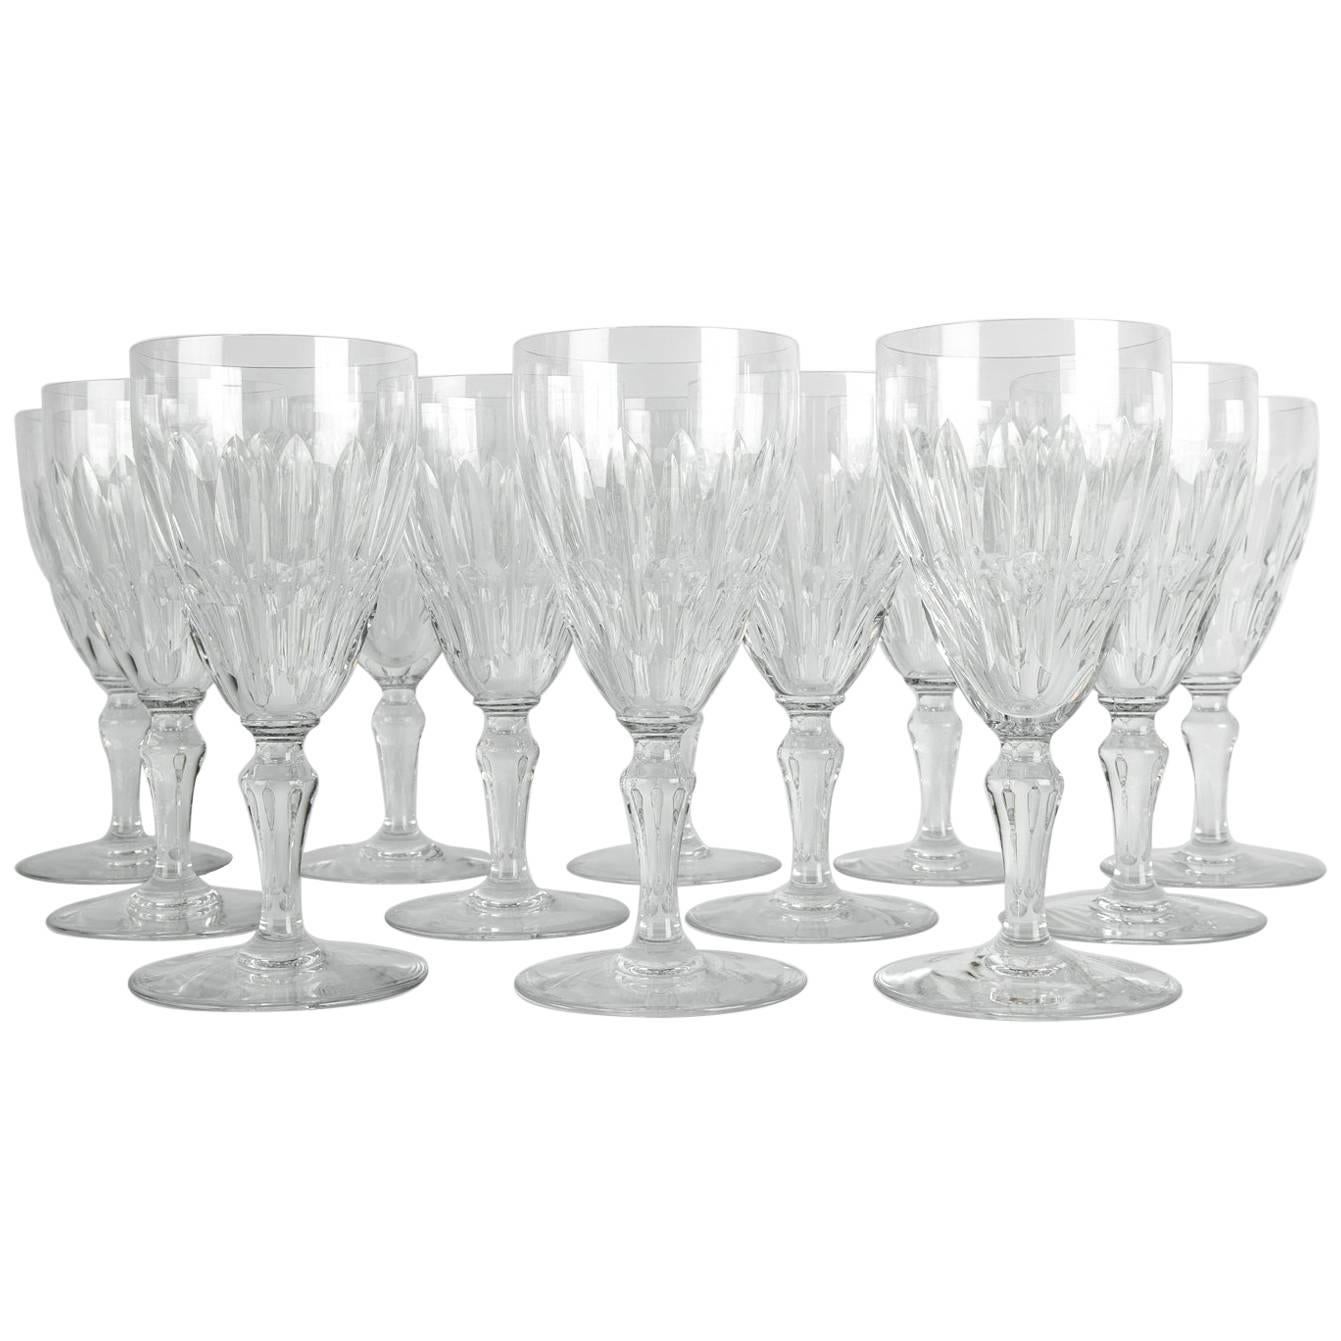 Mid-20th Century Baccarat Crystal Glassware Set